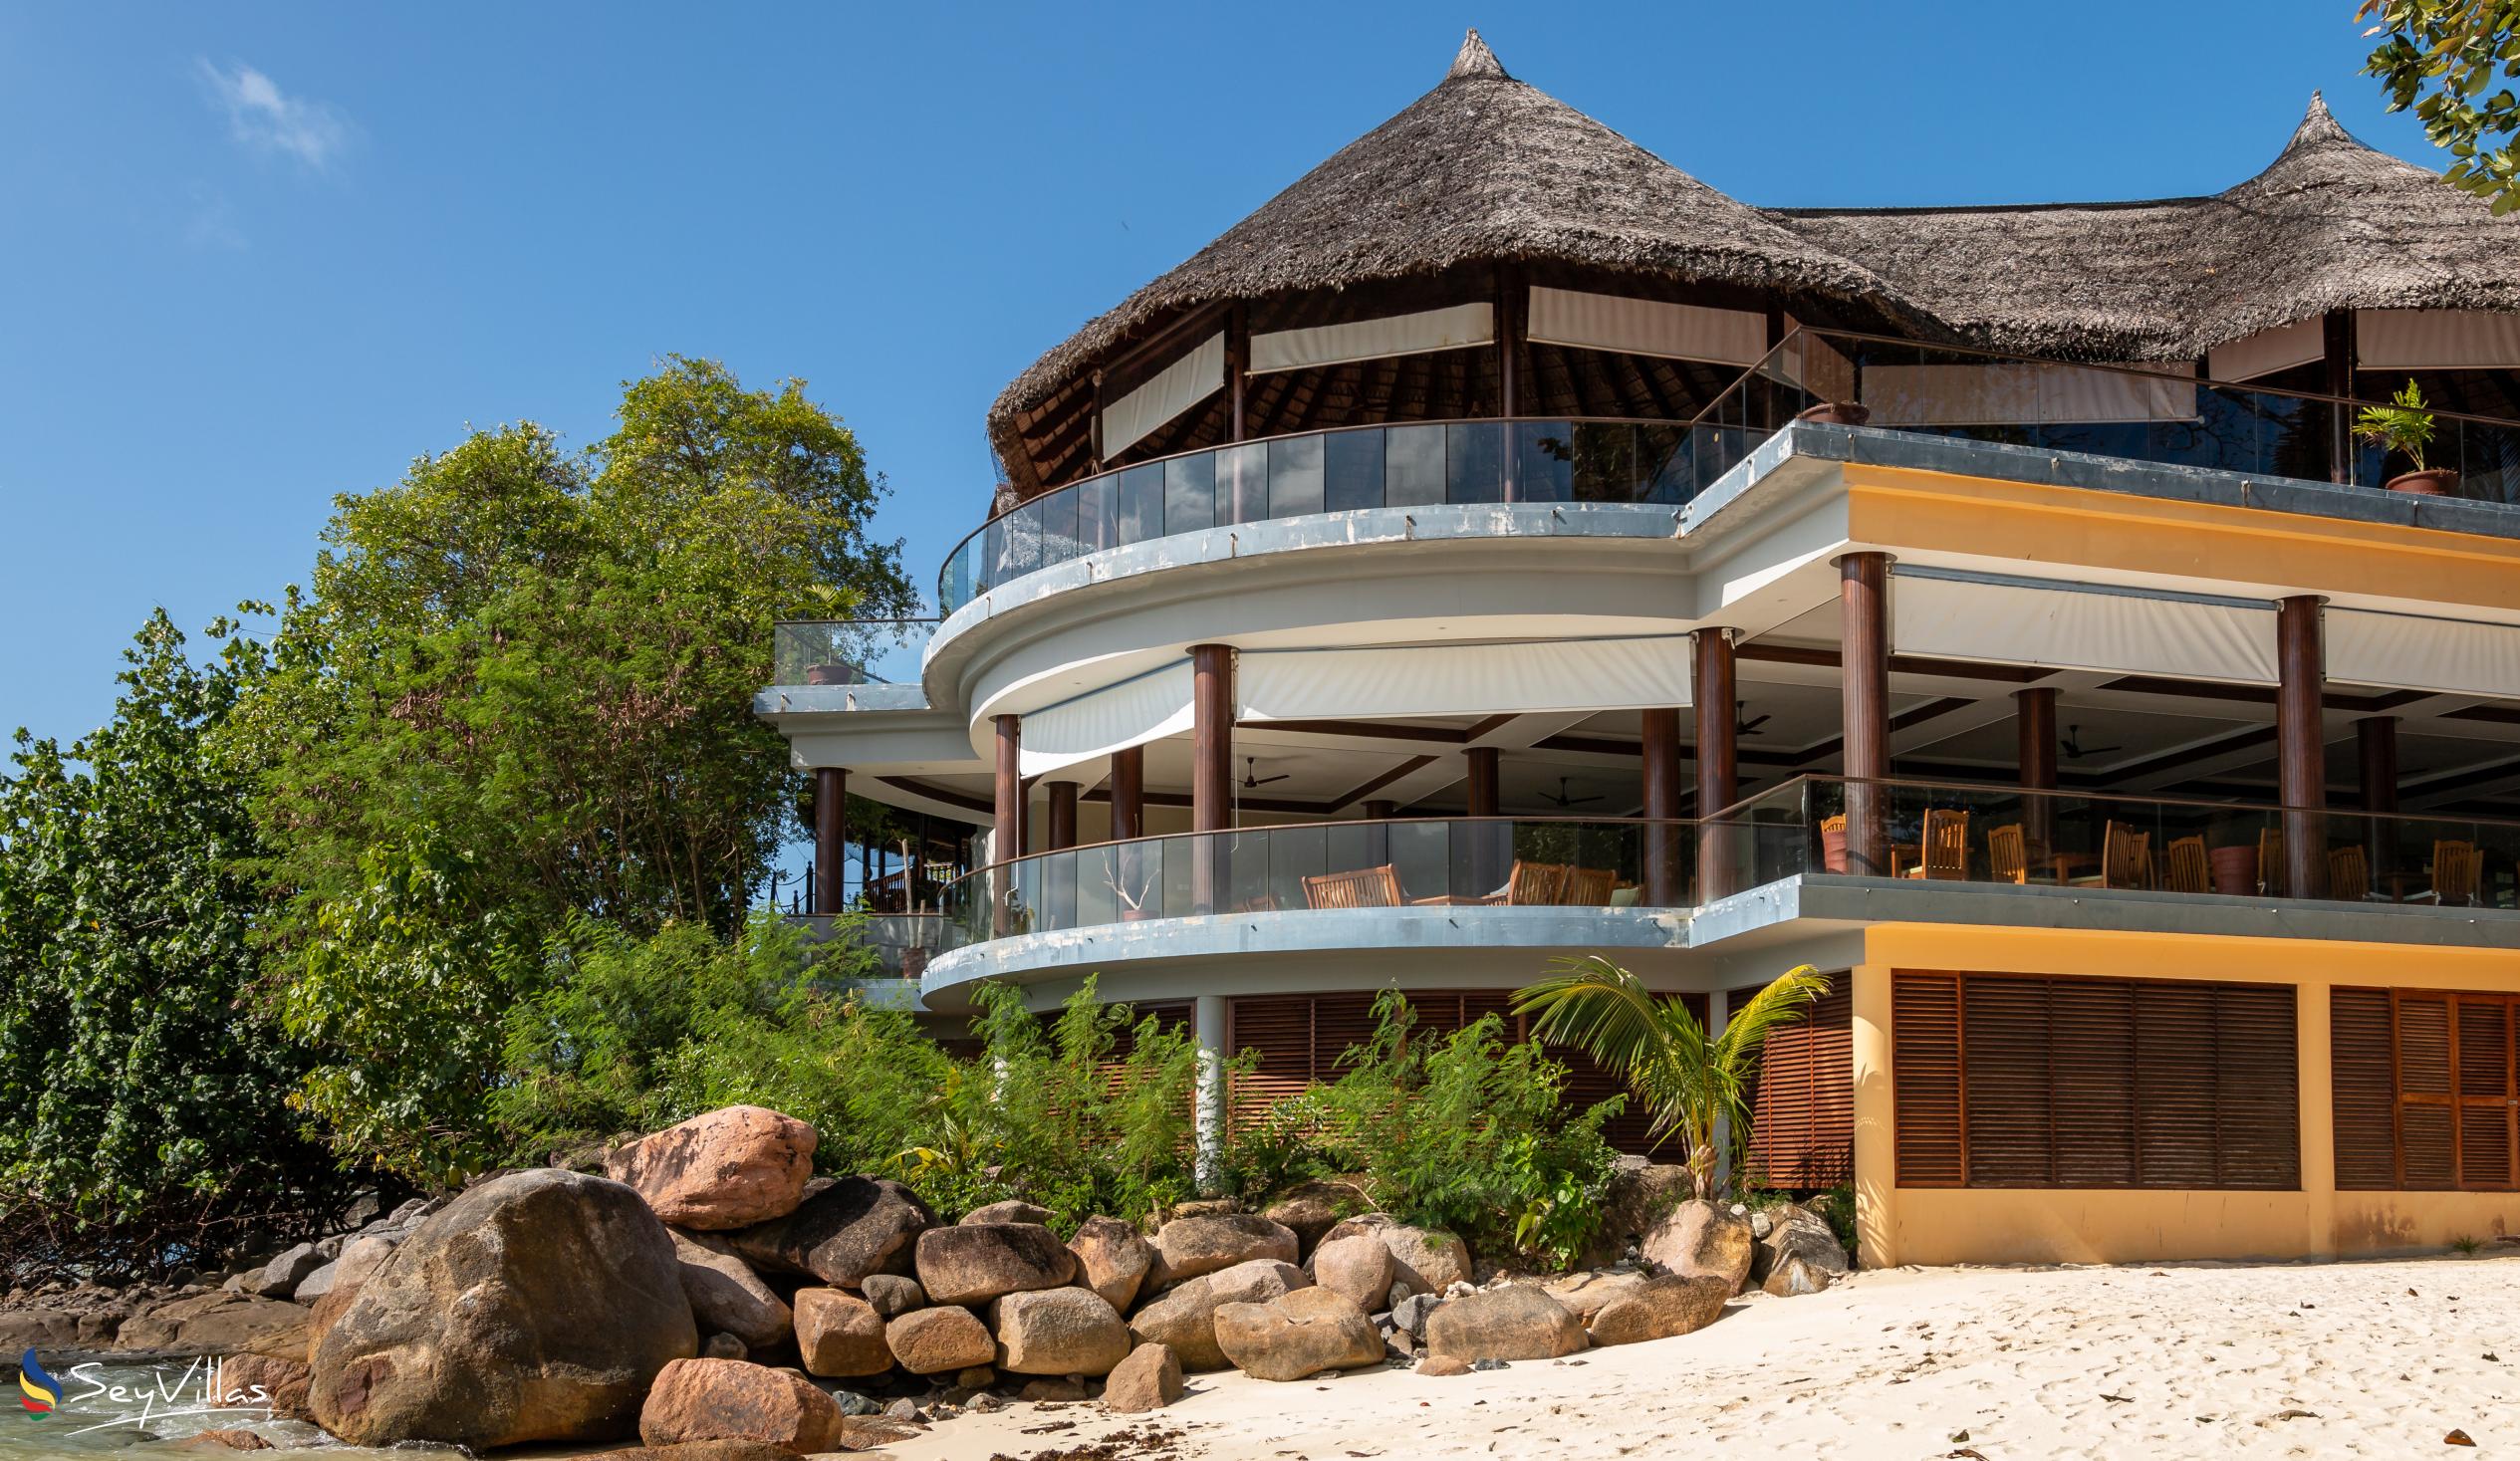 Photo 13: Cerf Island Resort - Outdoor area - Cerf Island (Seychelles)